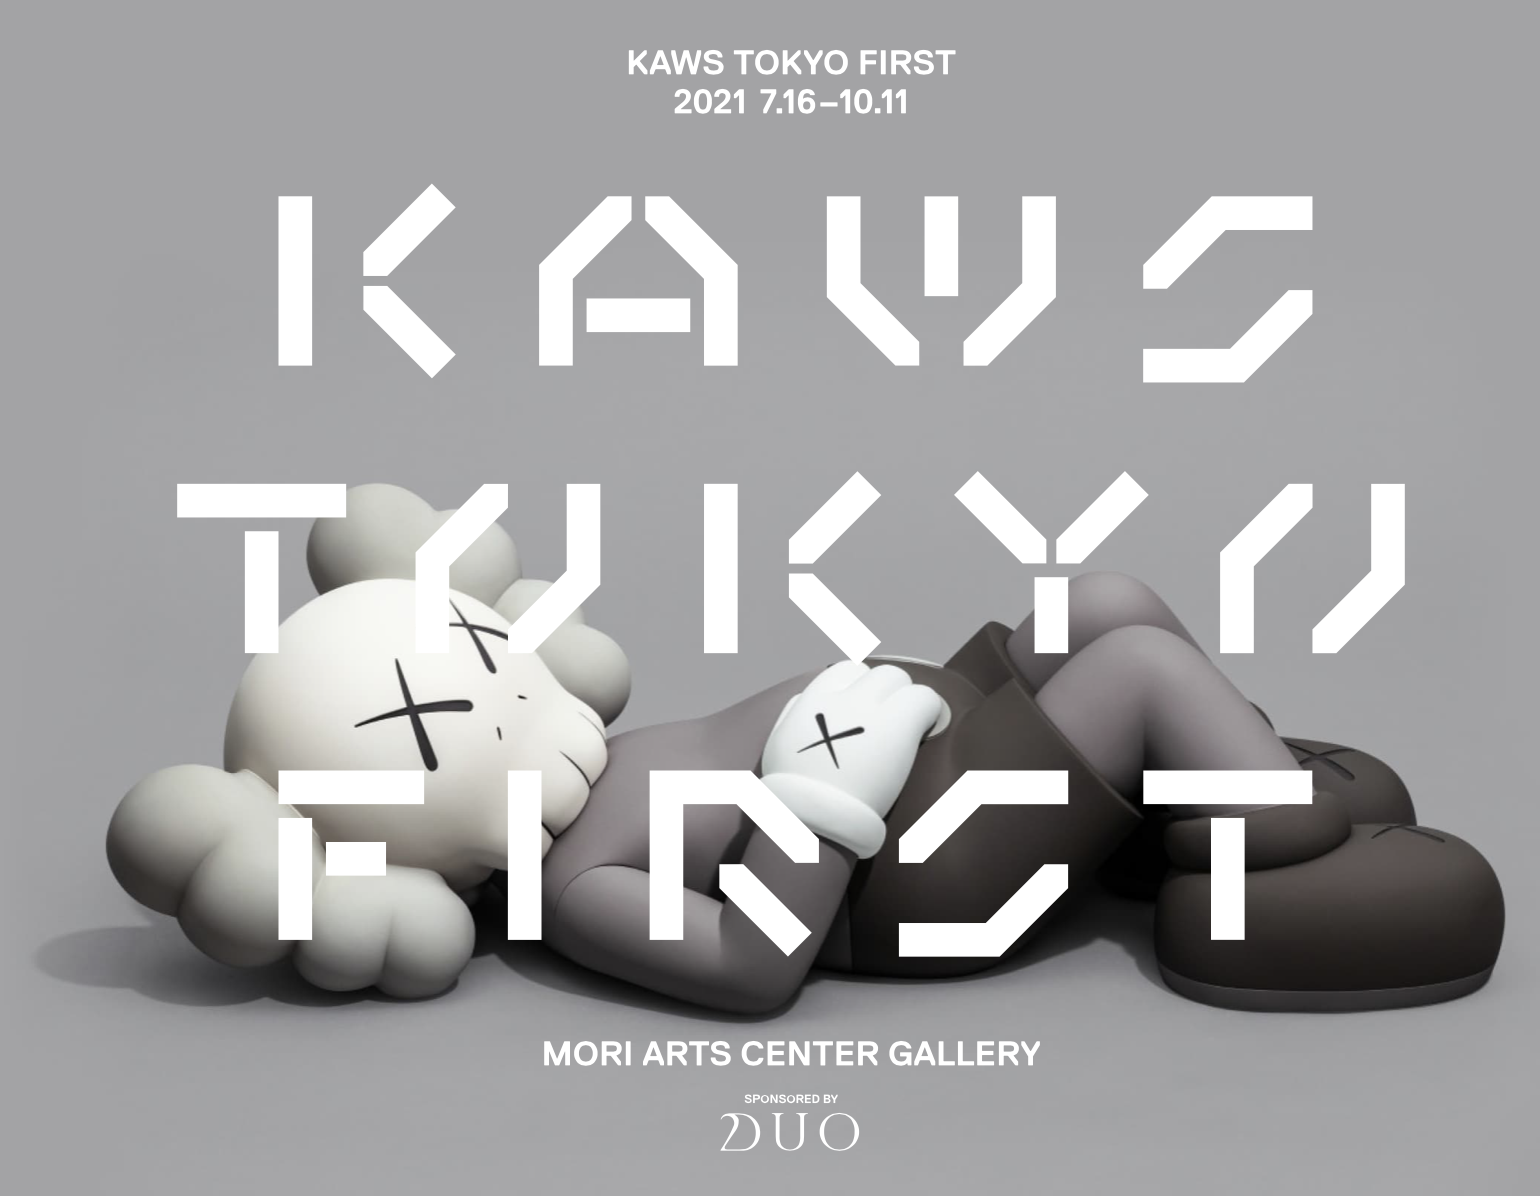 KAWS TOKYO FIRST, 2021